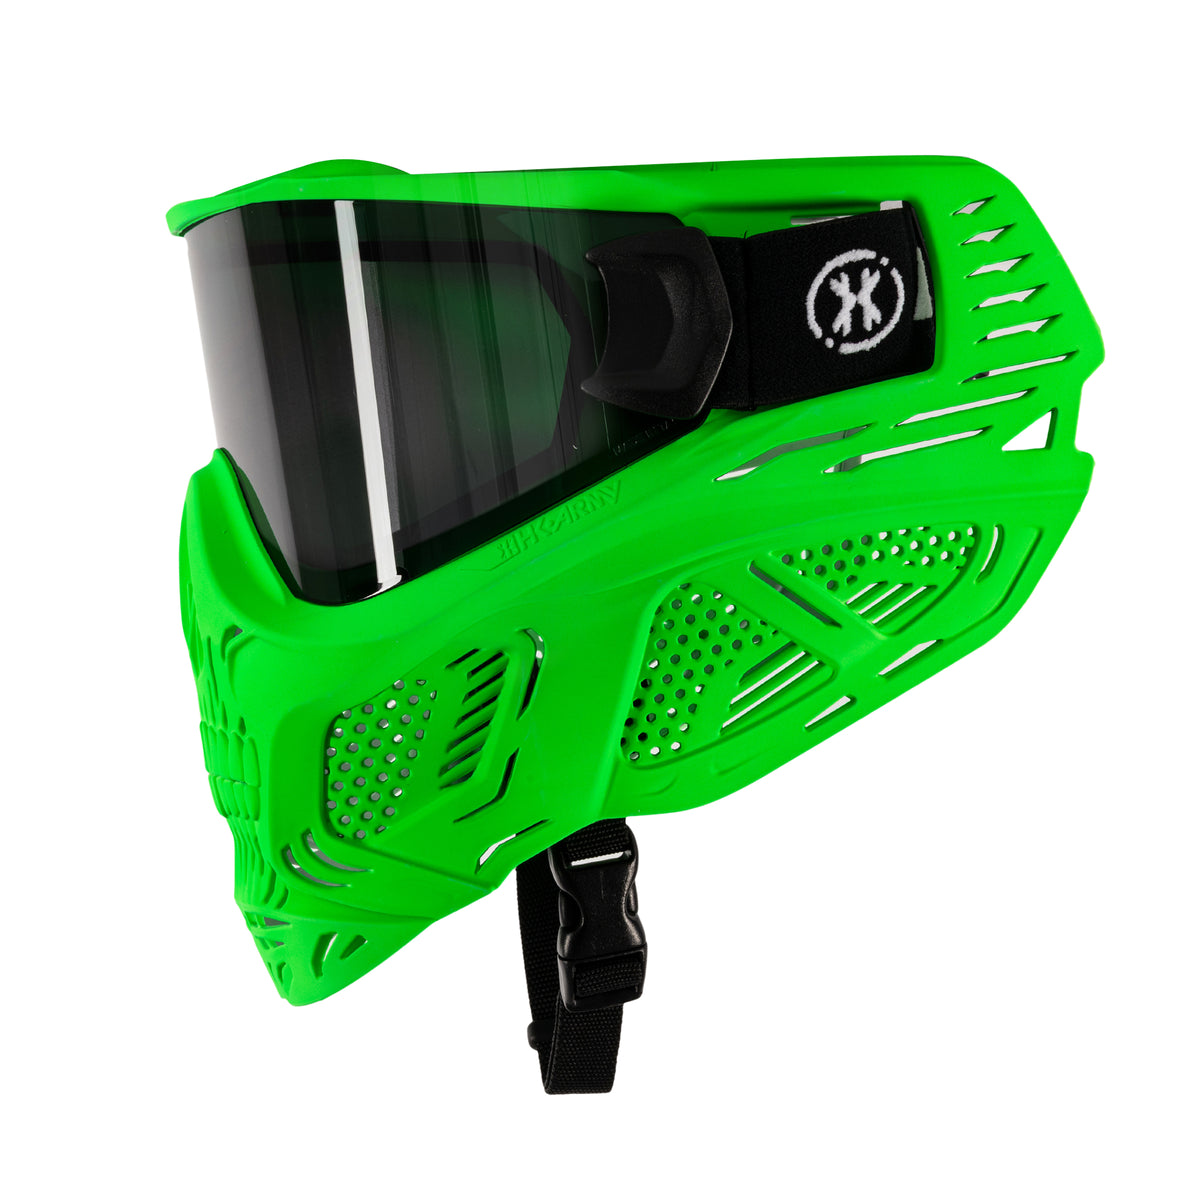 HSTL Skull Goggle "Neon Green" - W/ Smoke Lens | Paintball Goggle | Mask | Hk Army